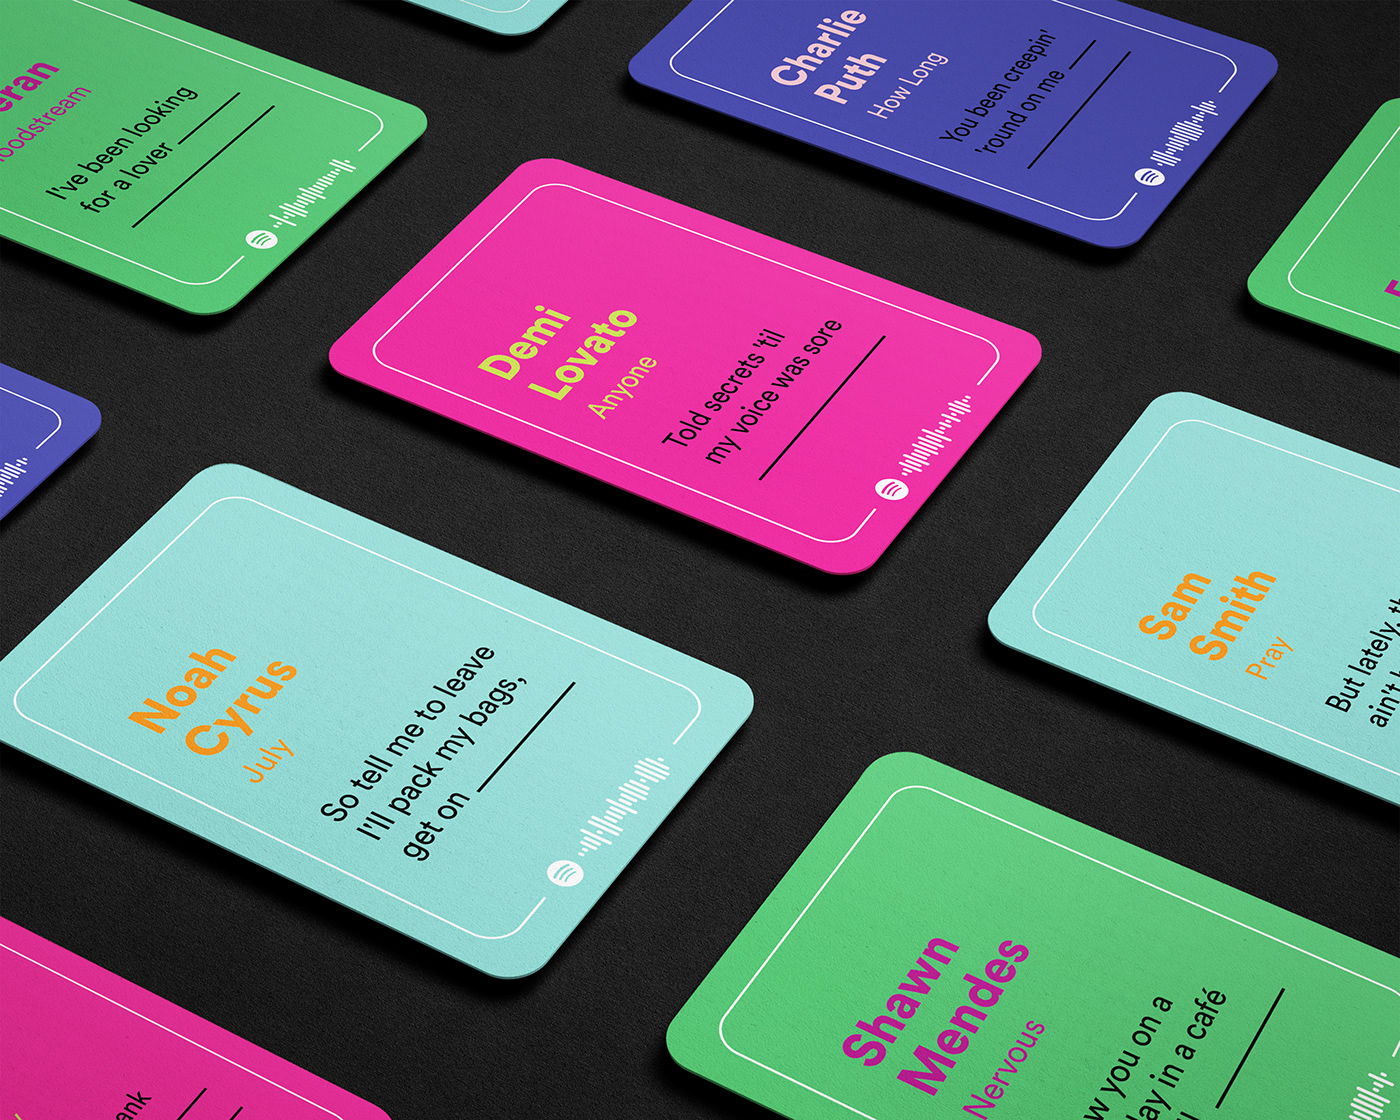 Baralho Card Deck card game concept art game jogo de cartas Playing Cards spotify spotify concept art spotify game